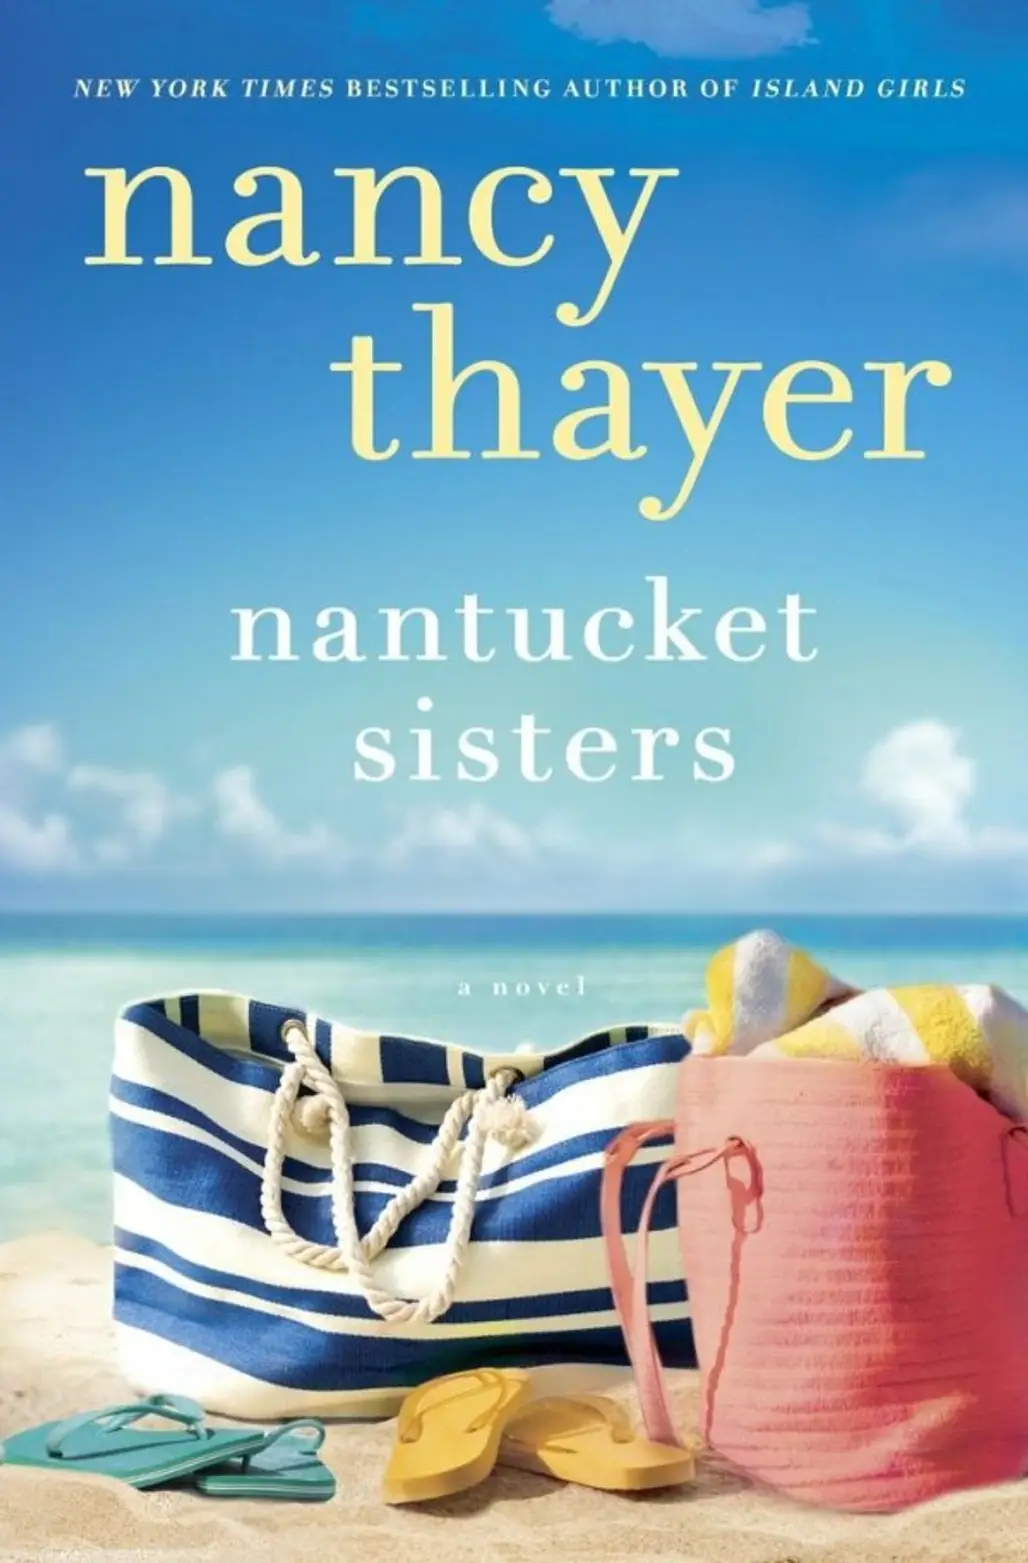 “Nantucket Sisters”